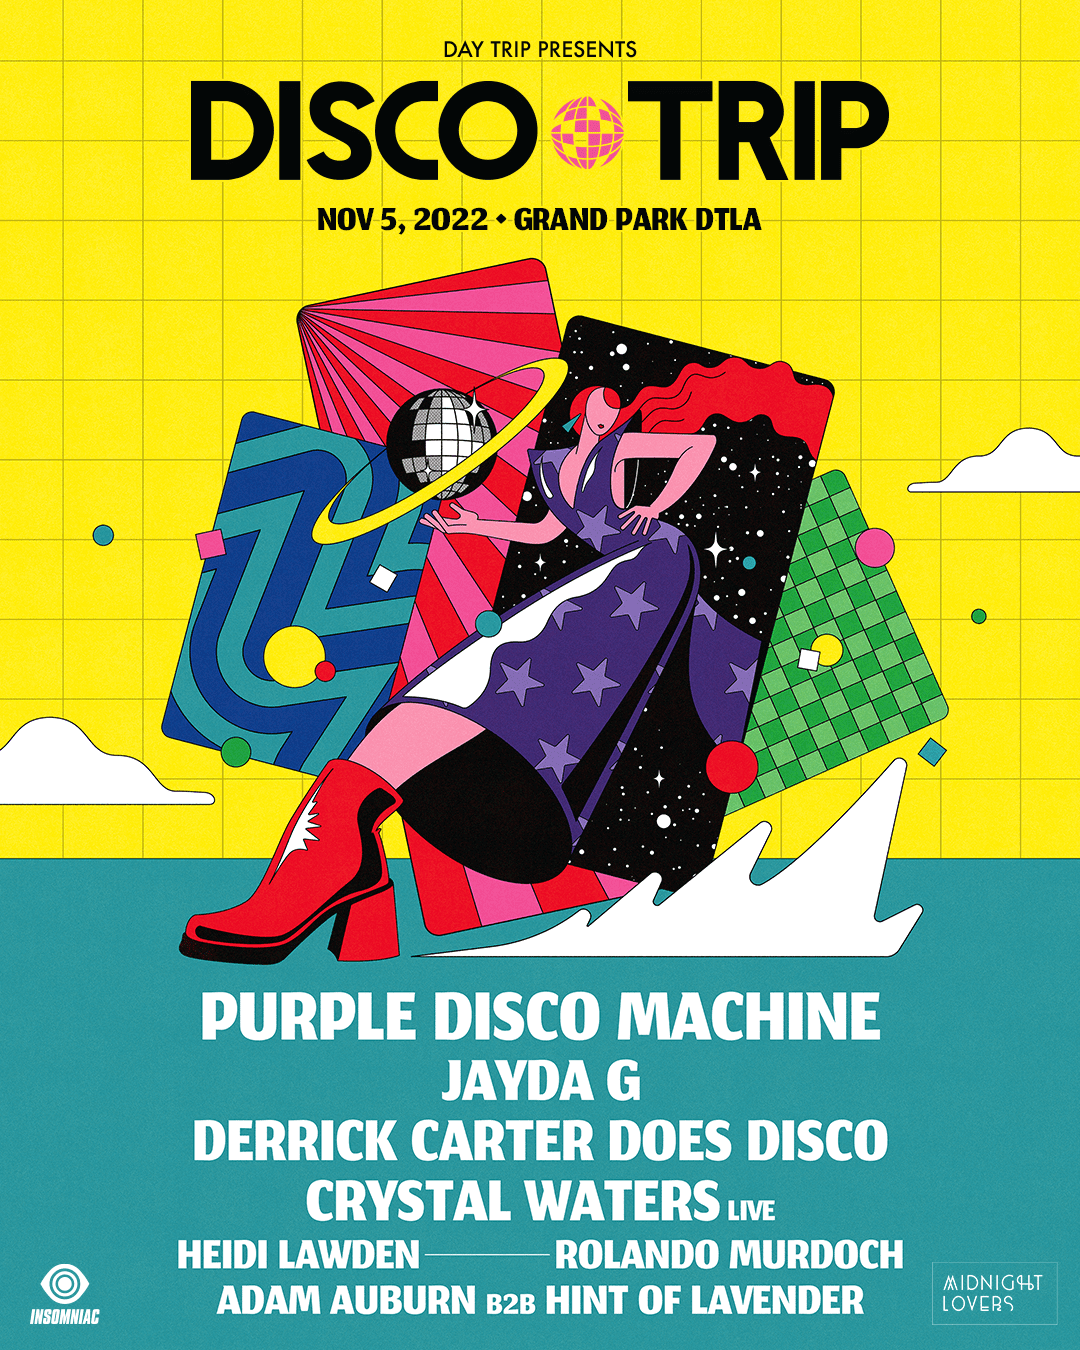 Insomniac Announces 'Disco Trip' With Purple Disco Machine EDM Maniac